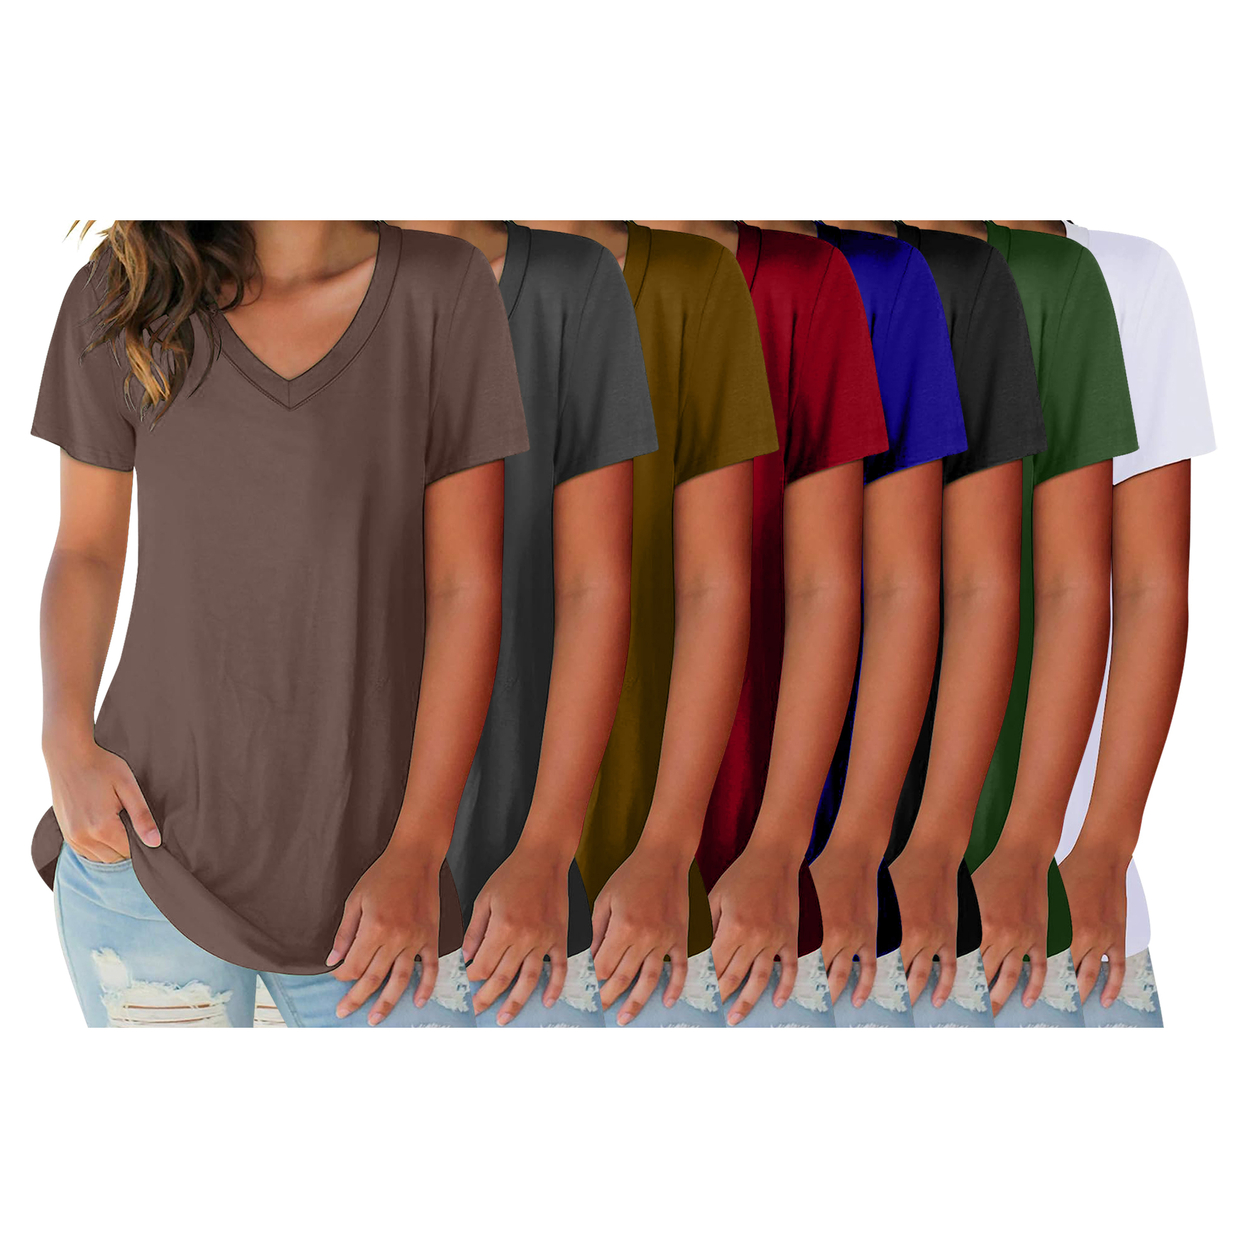 2-Pack: Women's Ultra Soft Smooth Cotton Blend Basic V-Neck Short Sleeve Shirts - Grey & Green, Xx-large